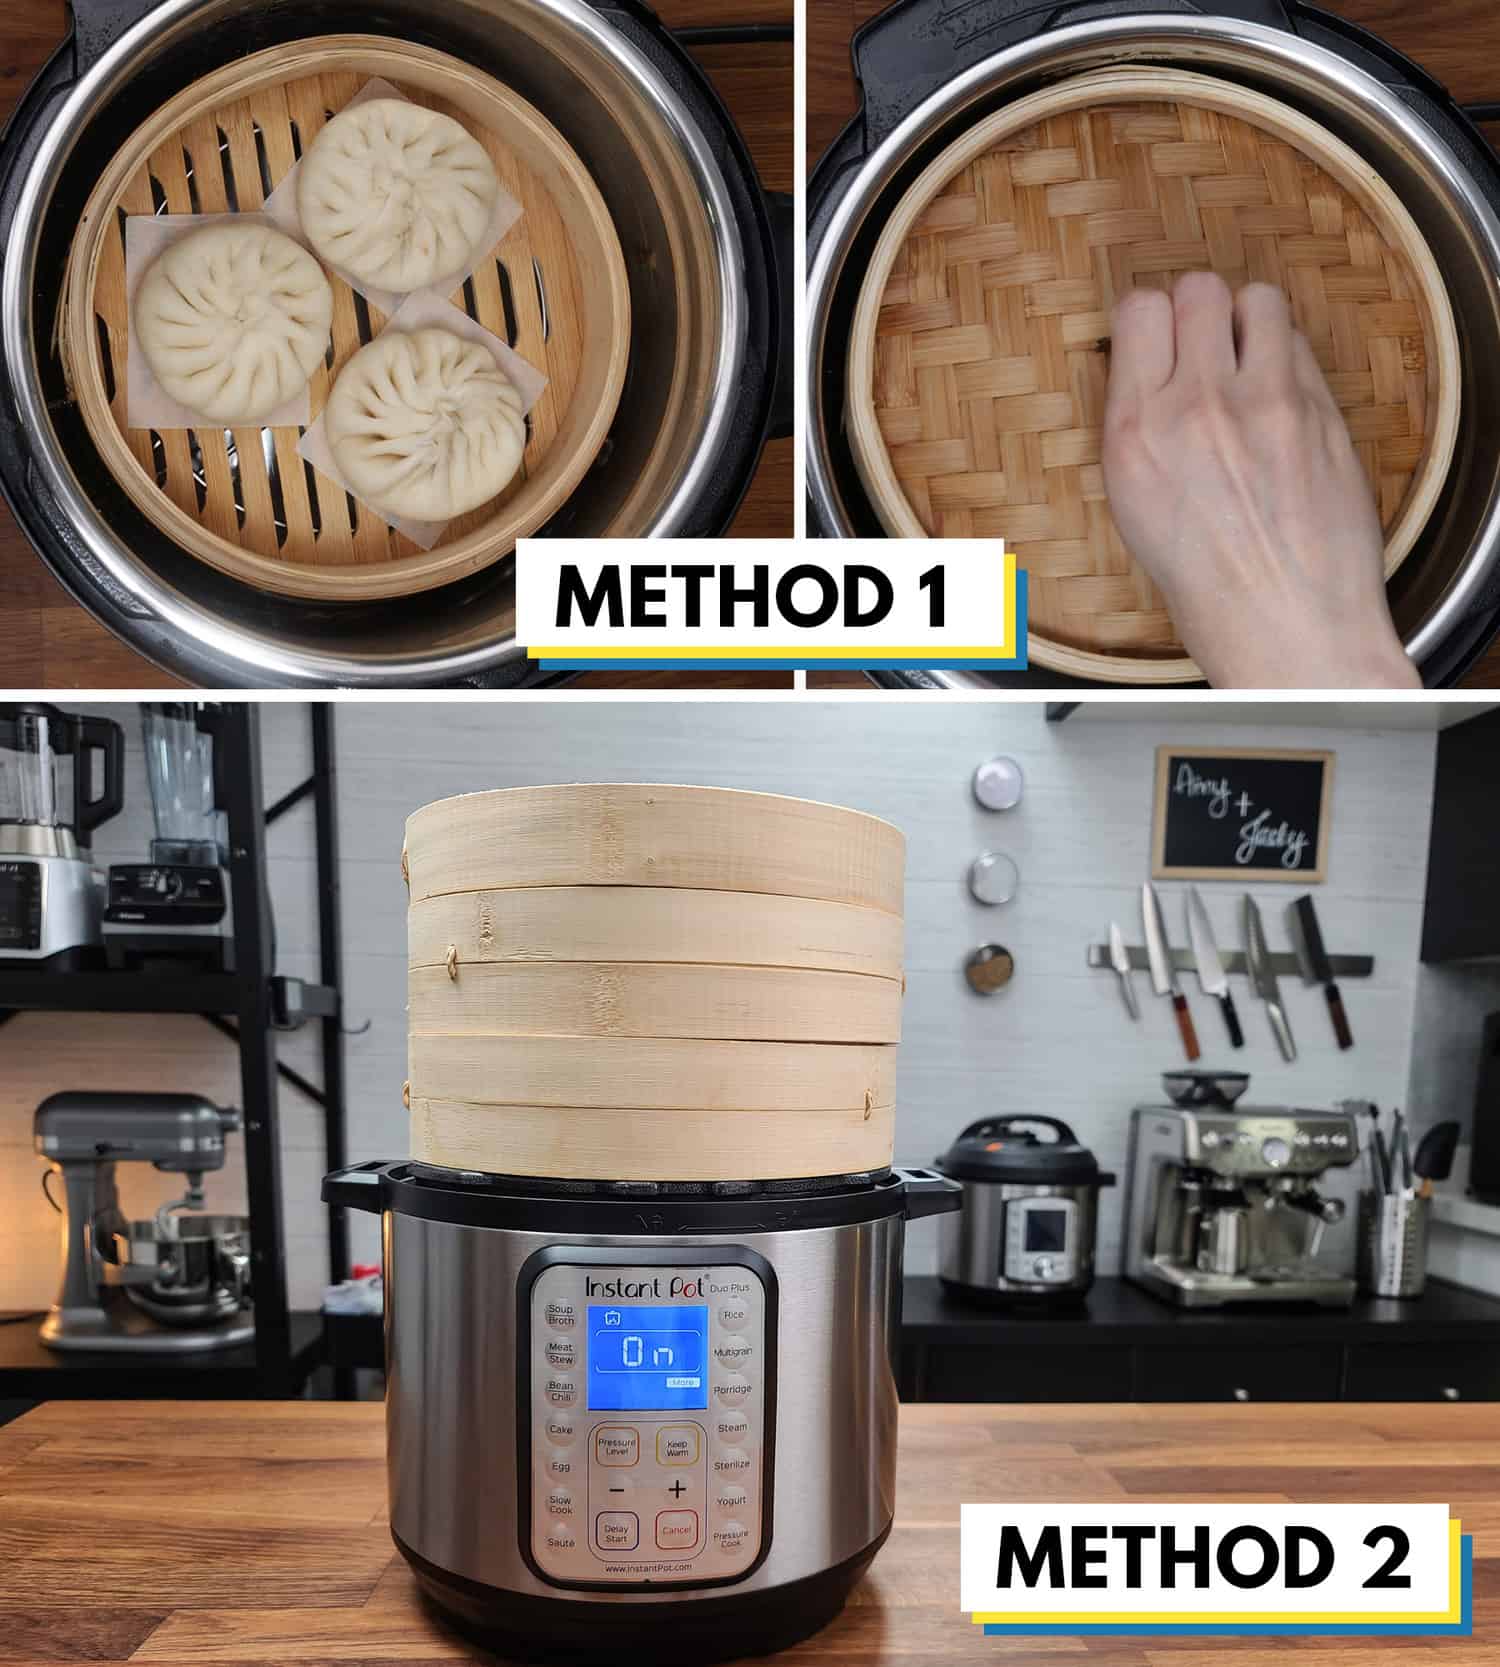 https://www.pressurecookrecipes.com/wp-content/uploads/2021/01/chinese-steamed-buns.jpg